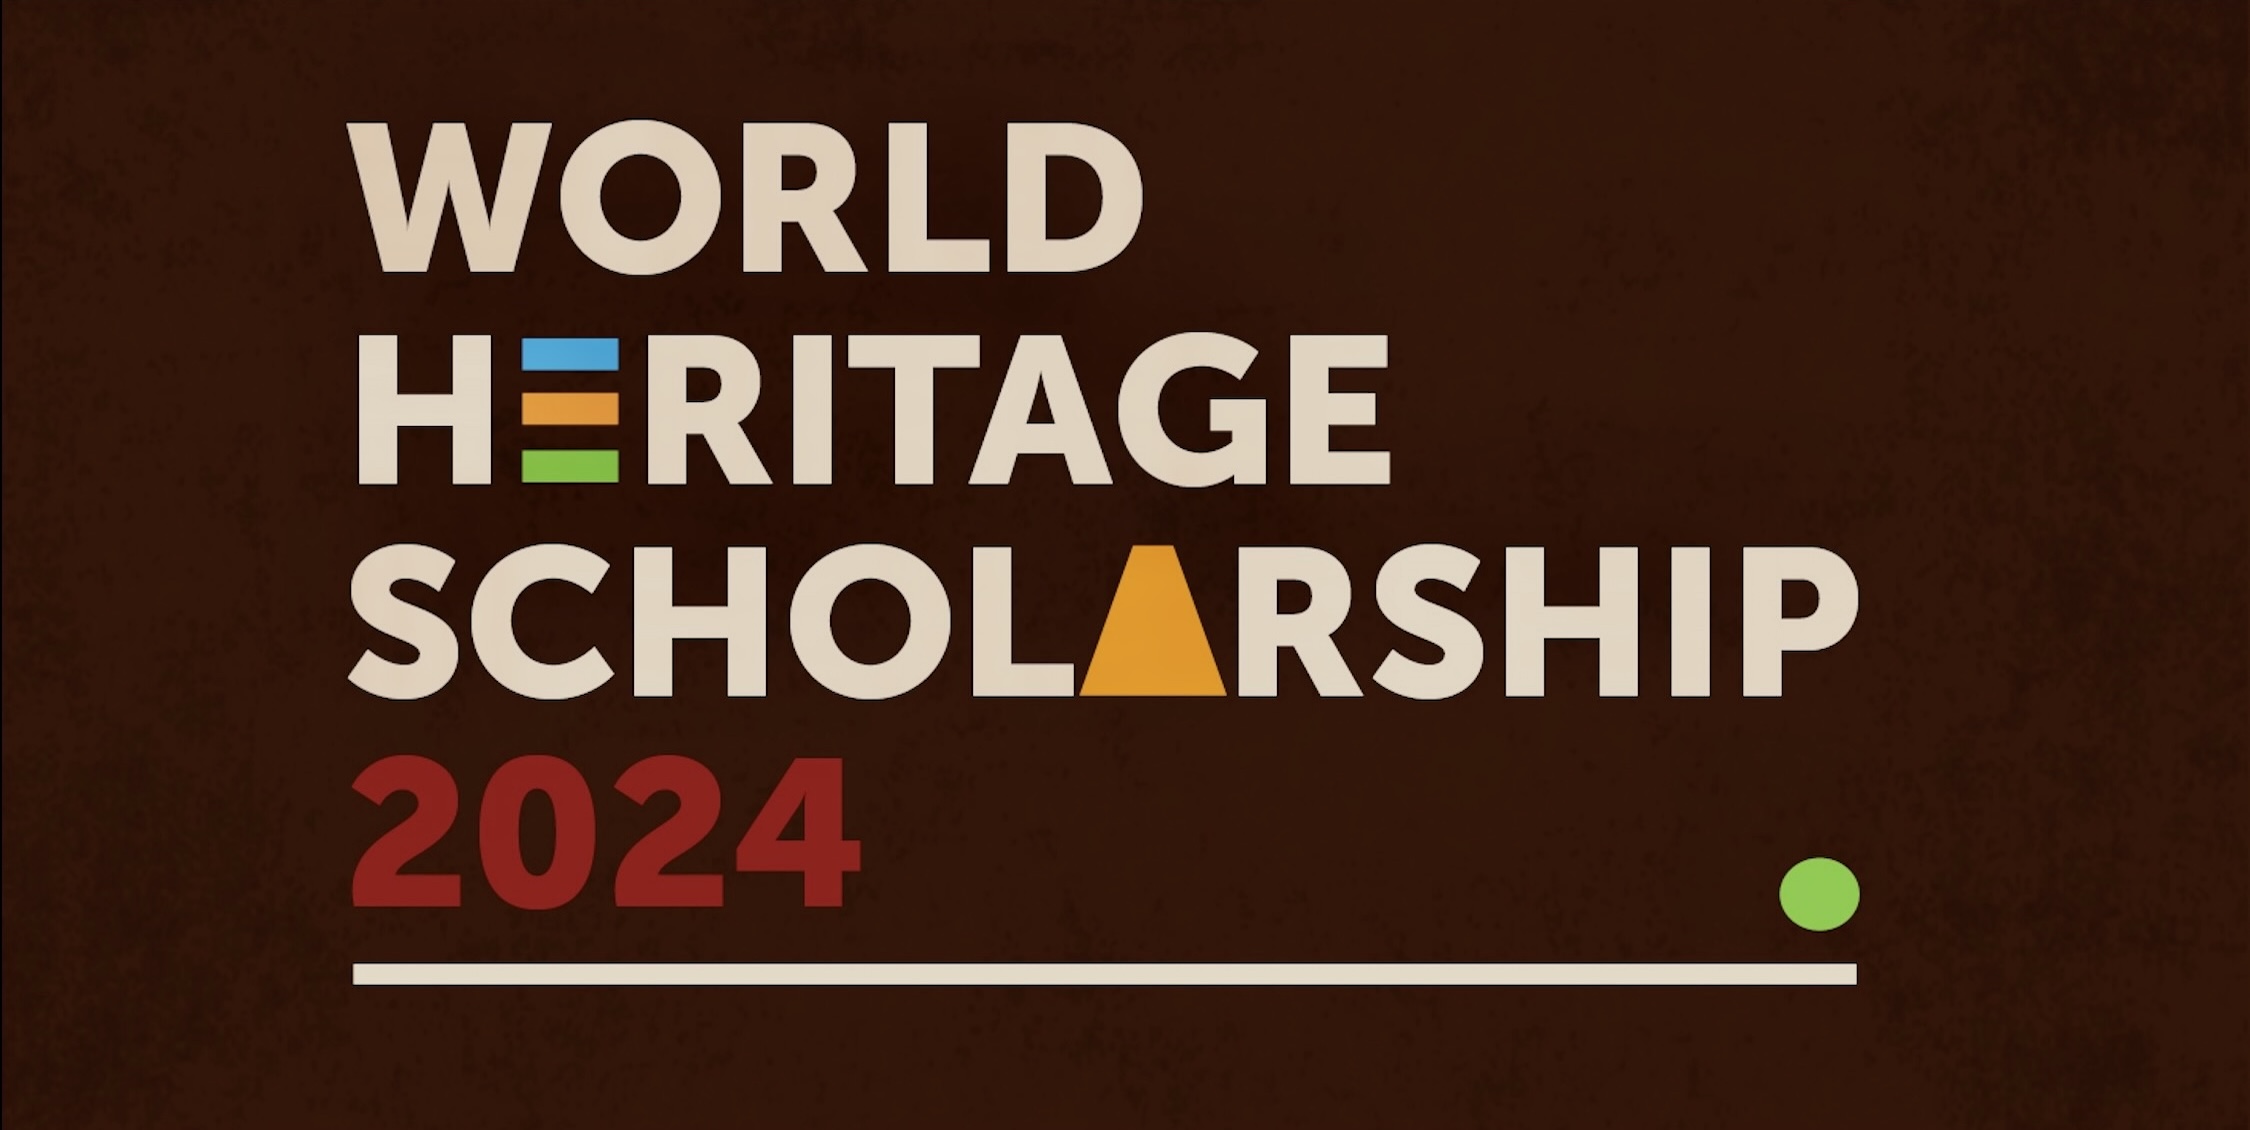 World Heritage Scholarship 2024